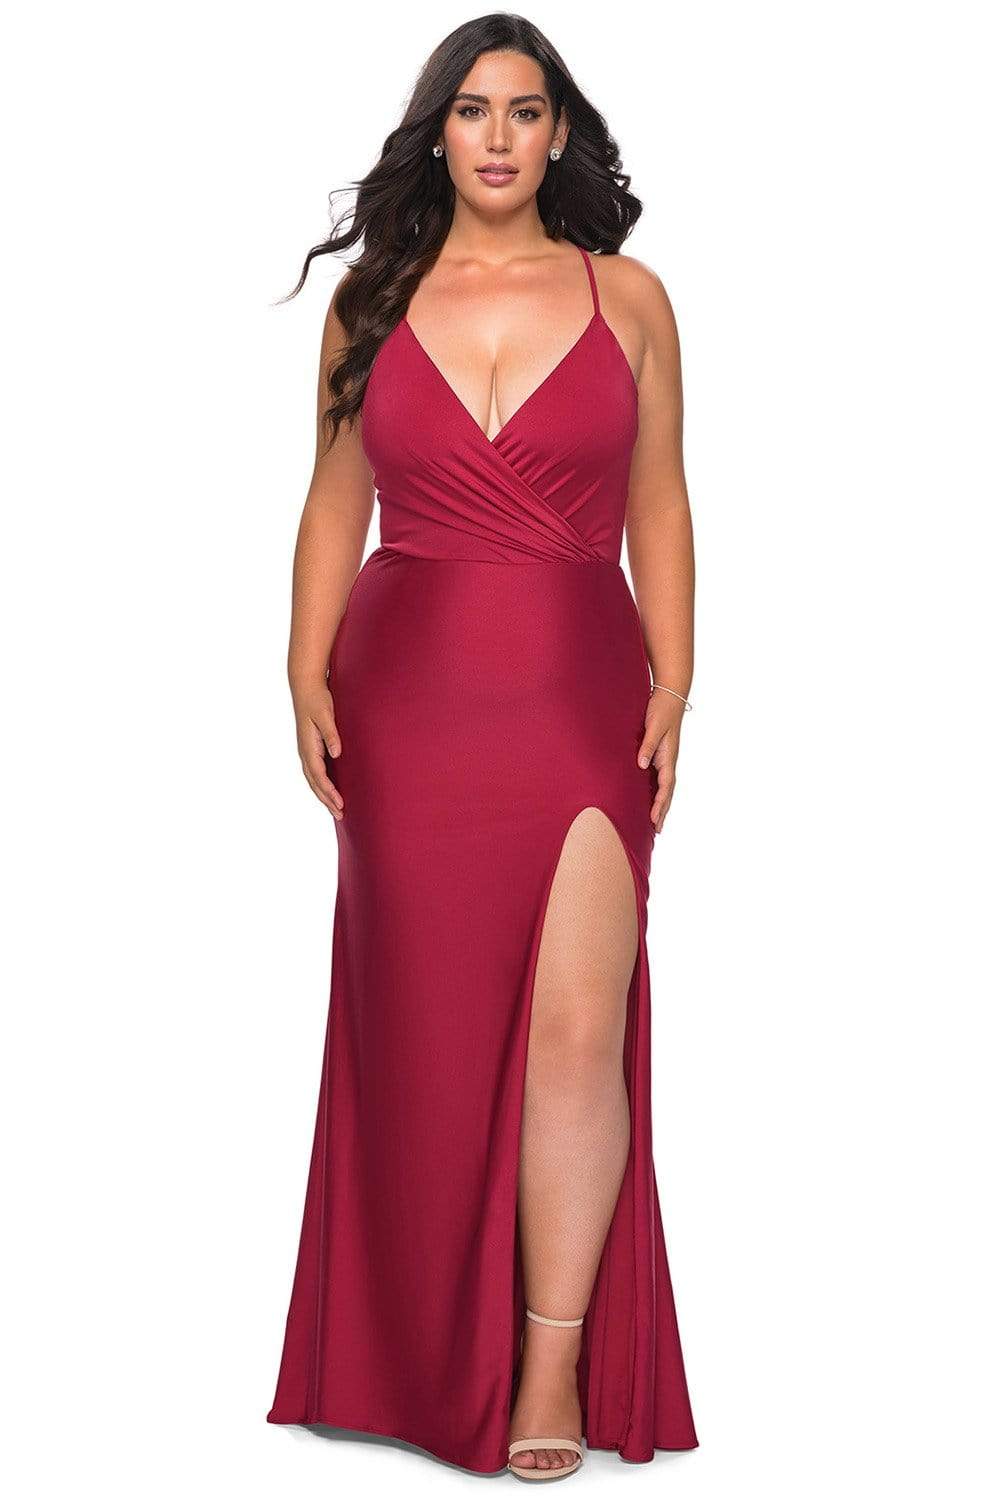 Image of La Femme - 29022 Plunging V-neck Jersey Plus Size Prom Dress